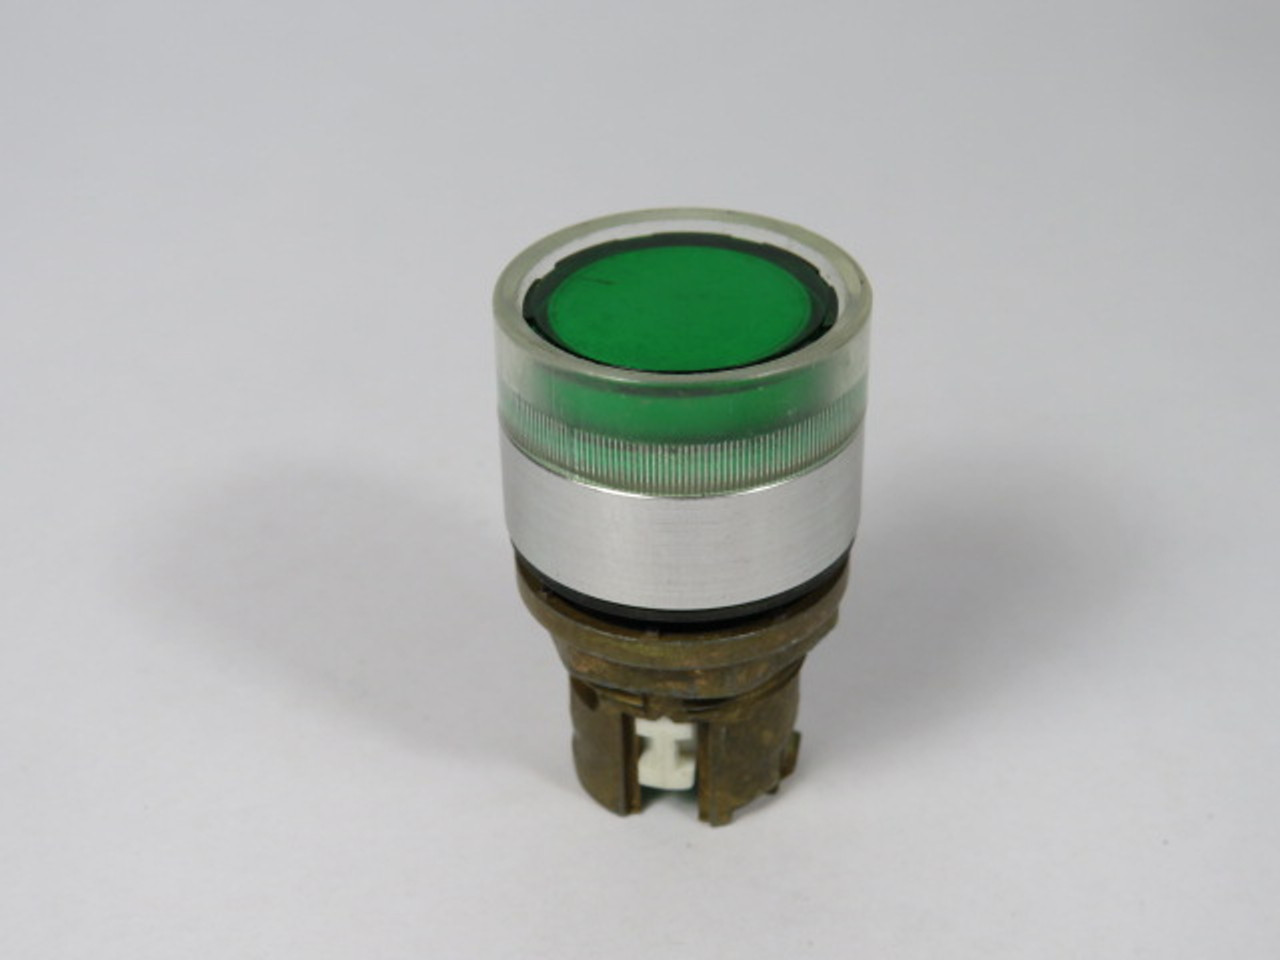 Allen-Bradley 800EM-LF3 Green Push Button Operator Only USED